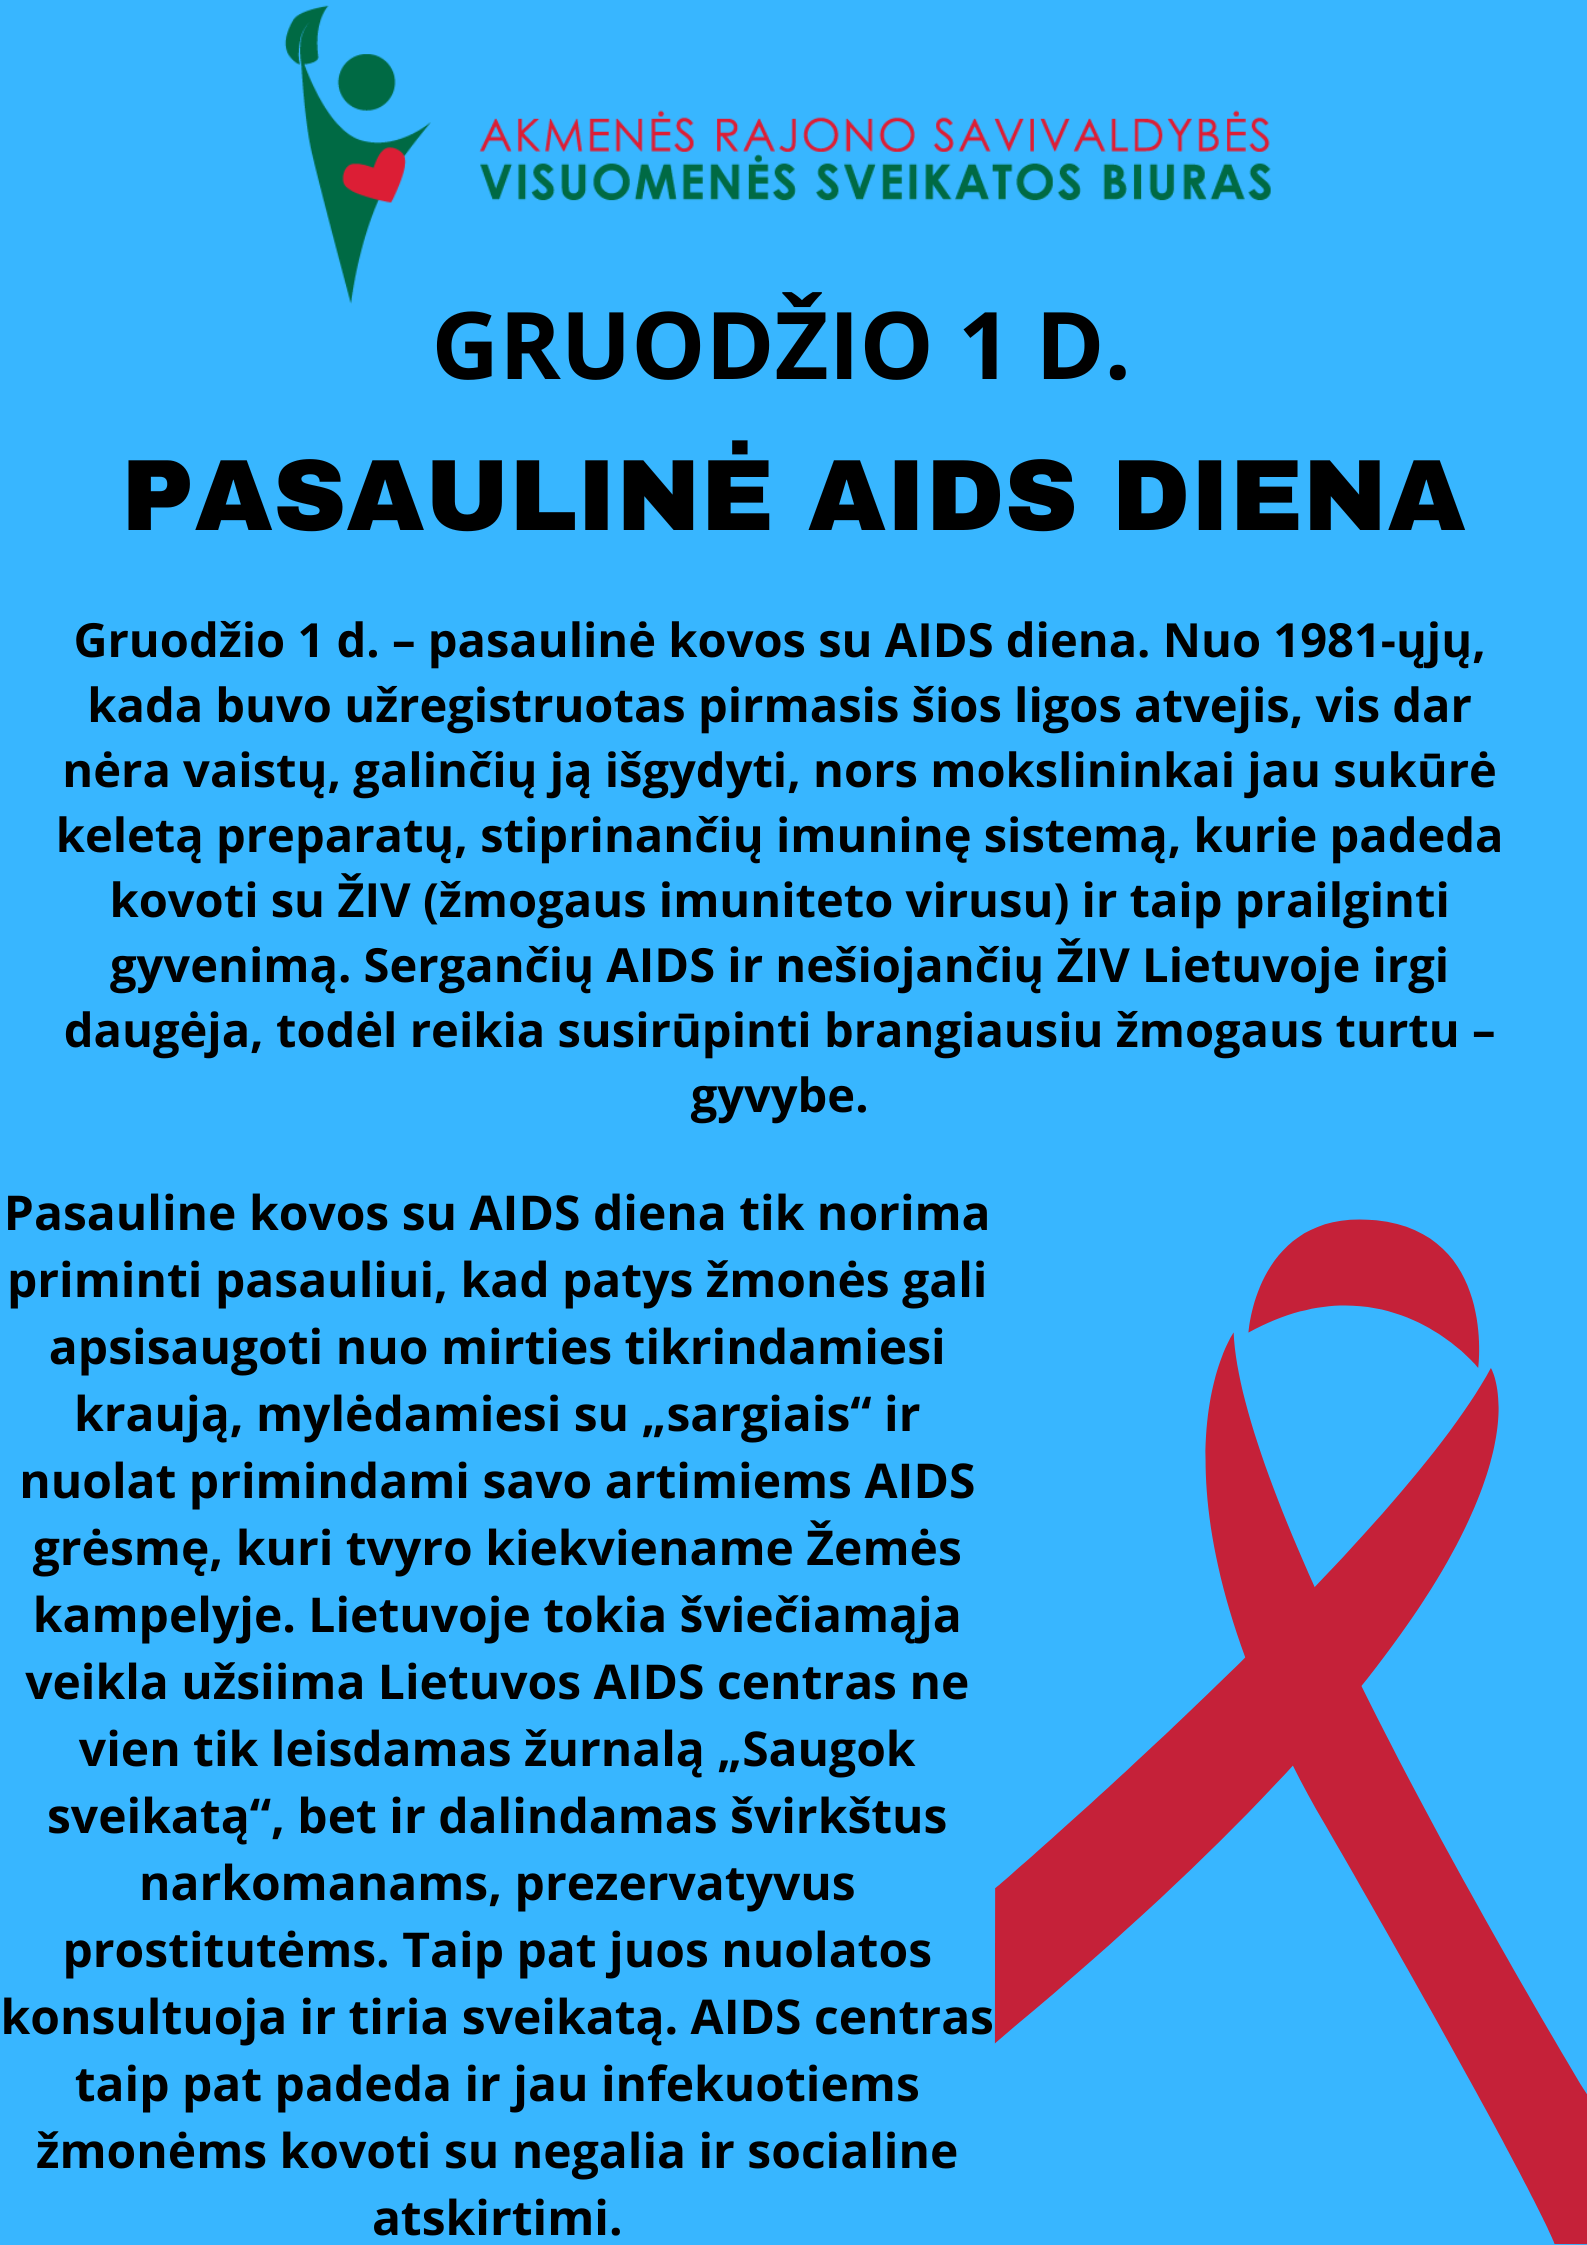 gruodzio-1-oji-–-pasauline-aids-diena